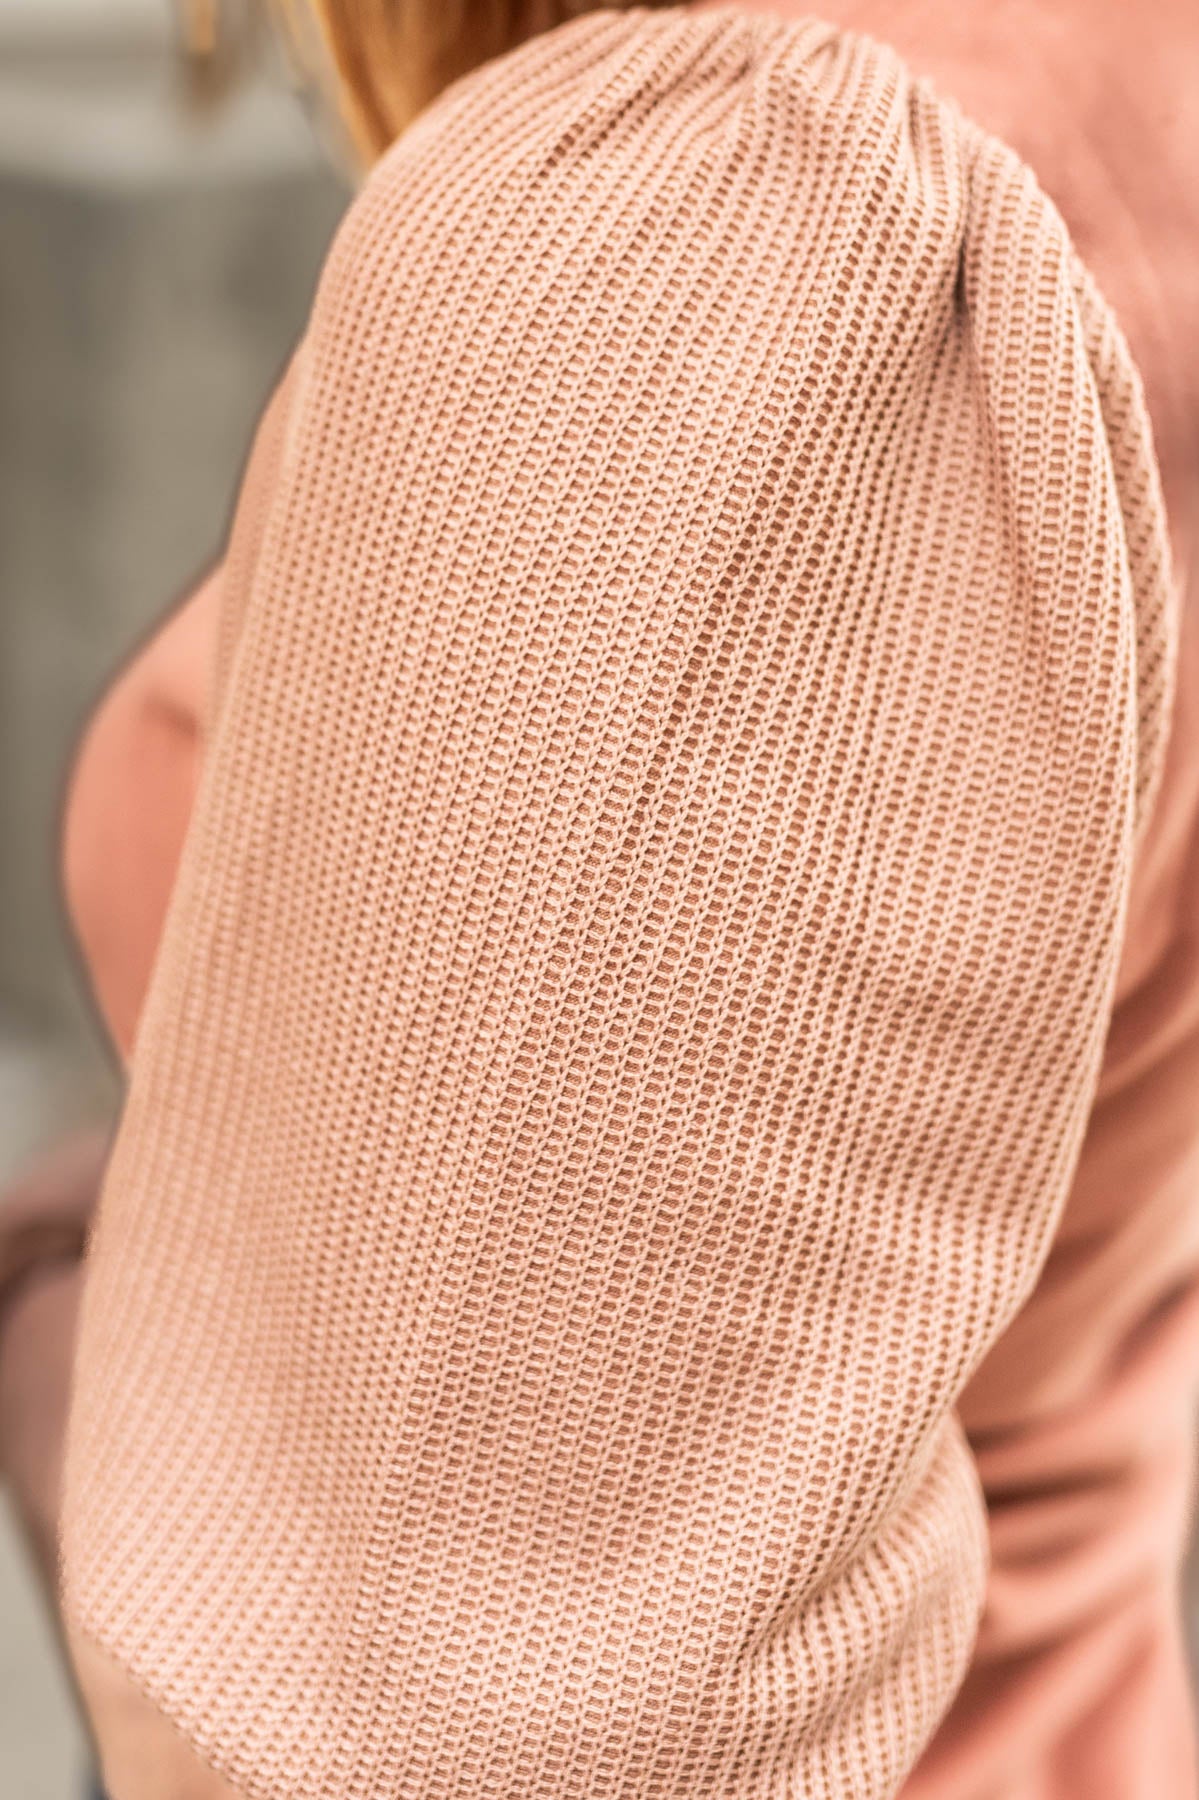 Sleeve of a short sleeve cinnamon top